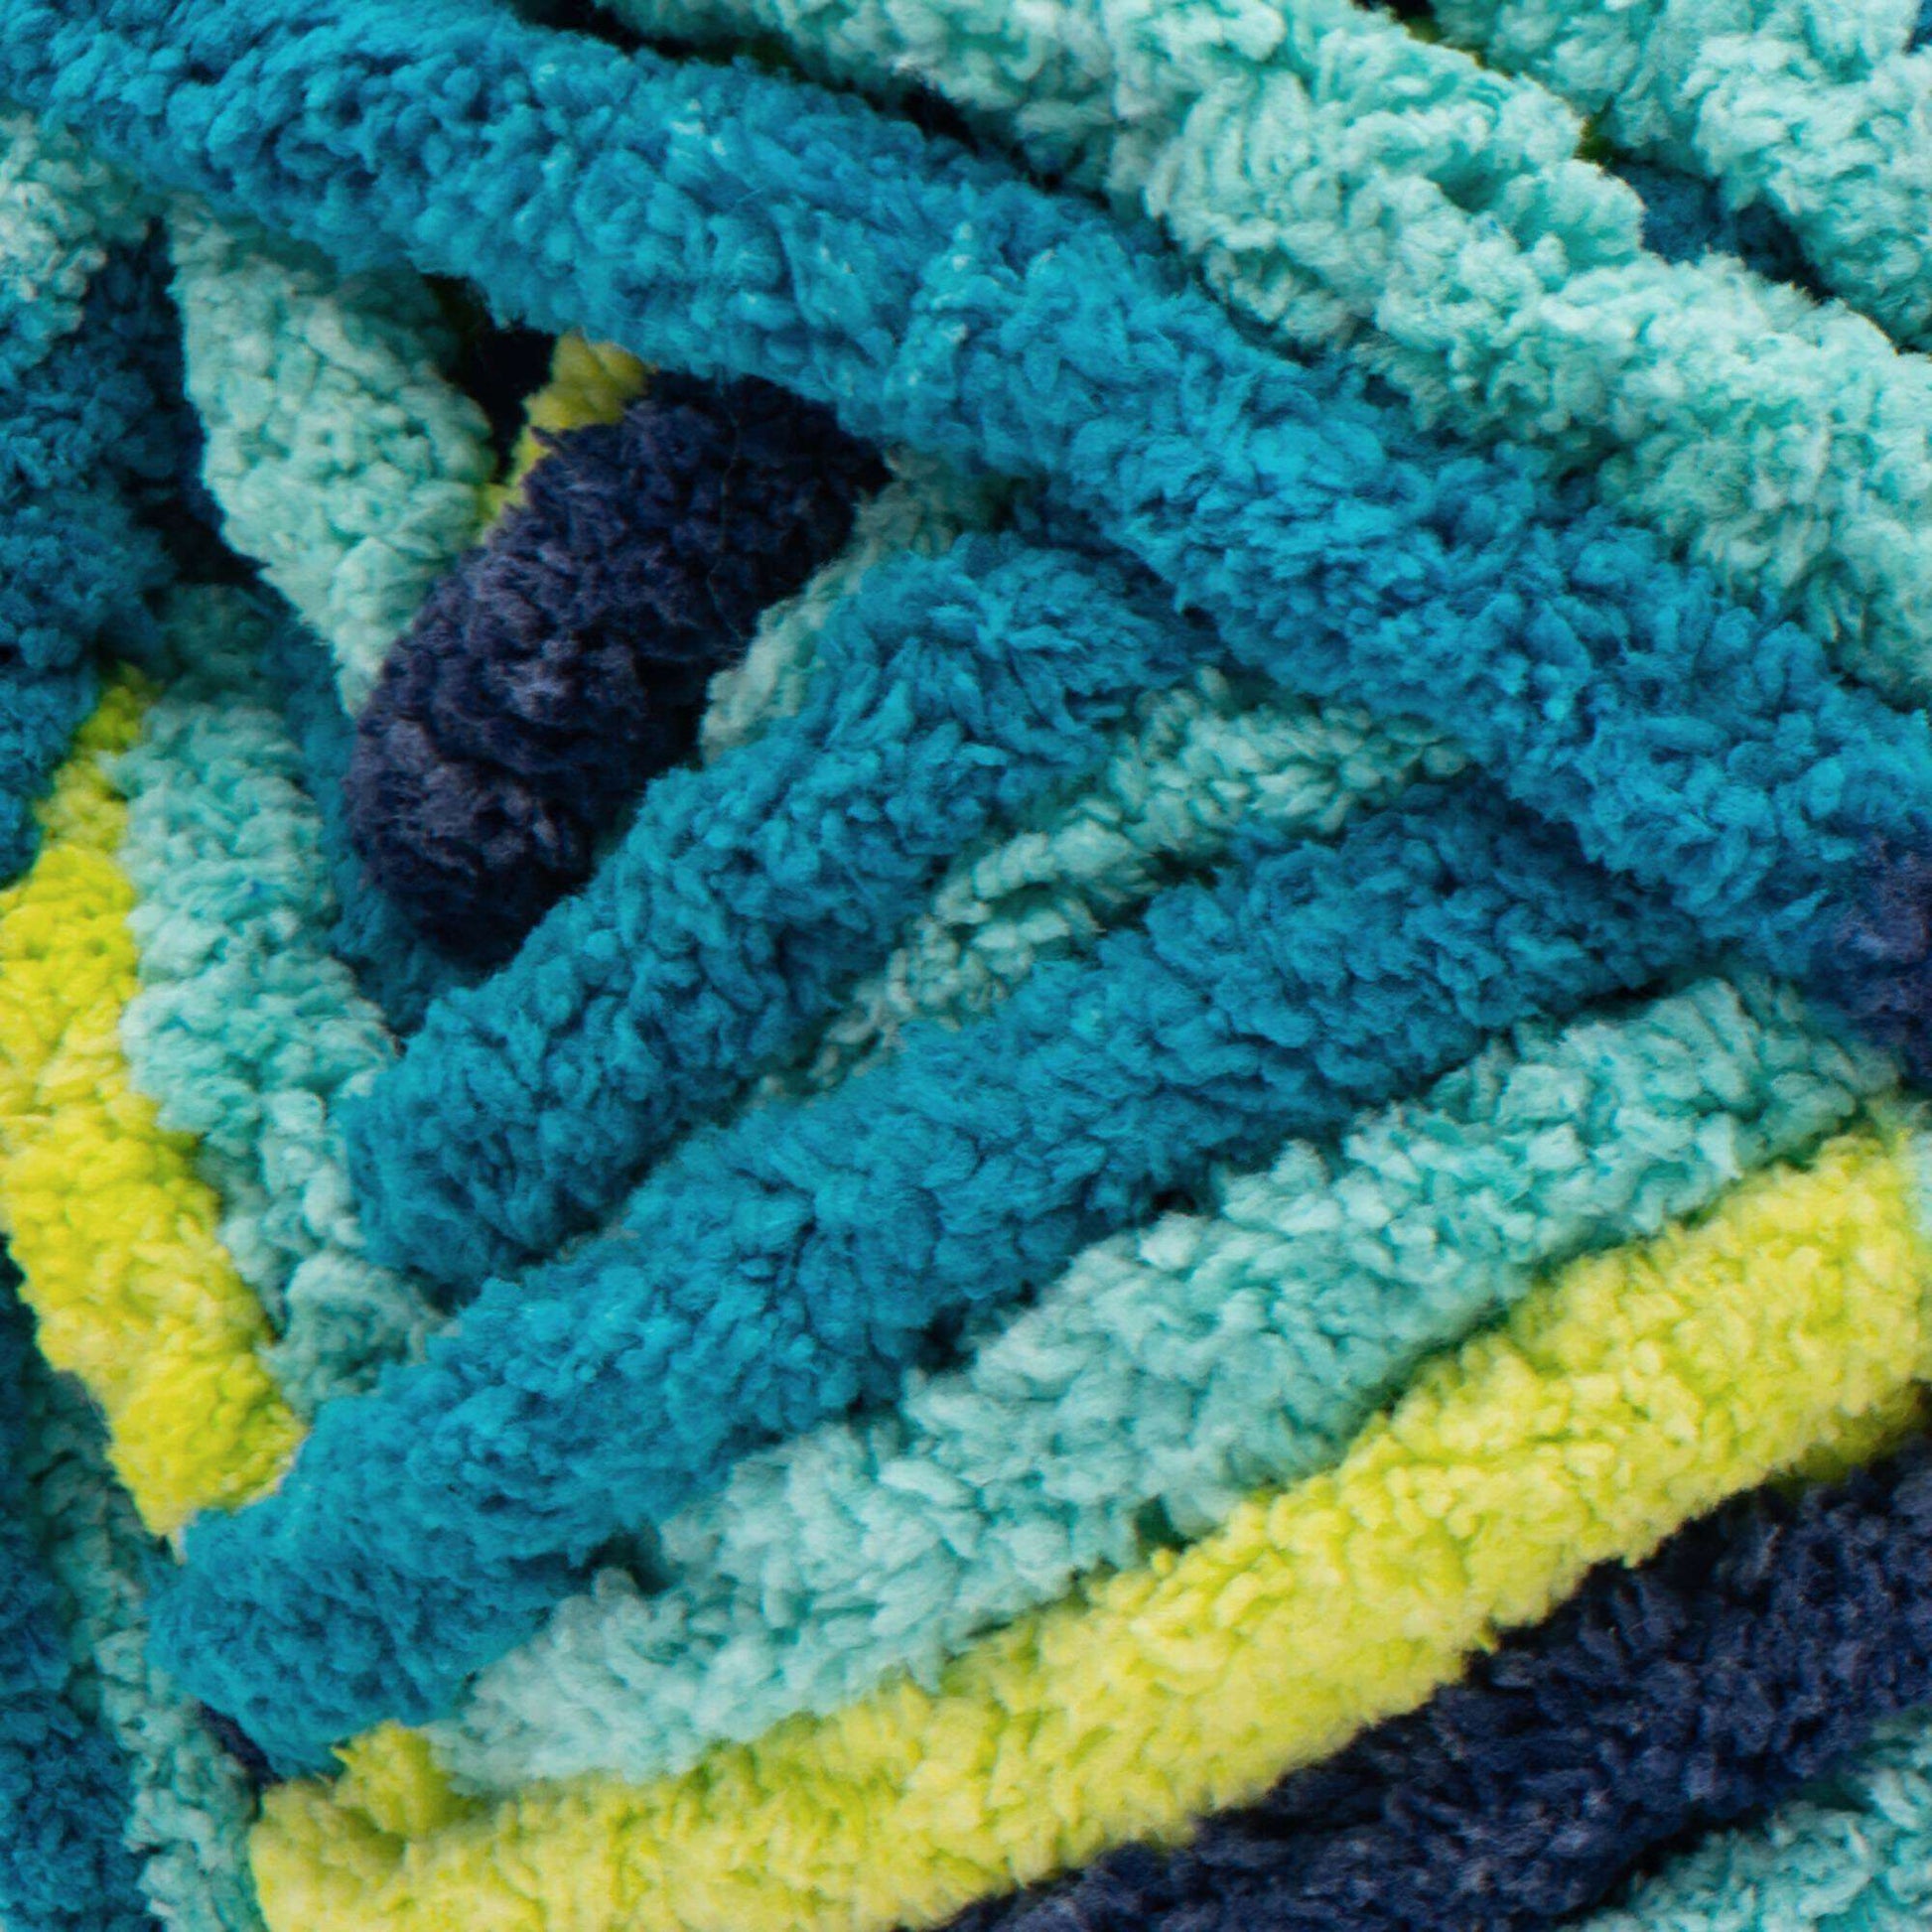 Bernat Blanket Extra Yarn (300g/10.5oz) Seaside Brights Varg